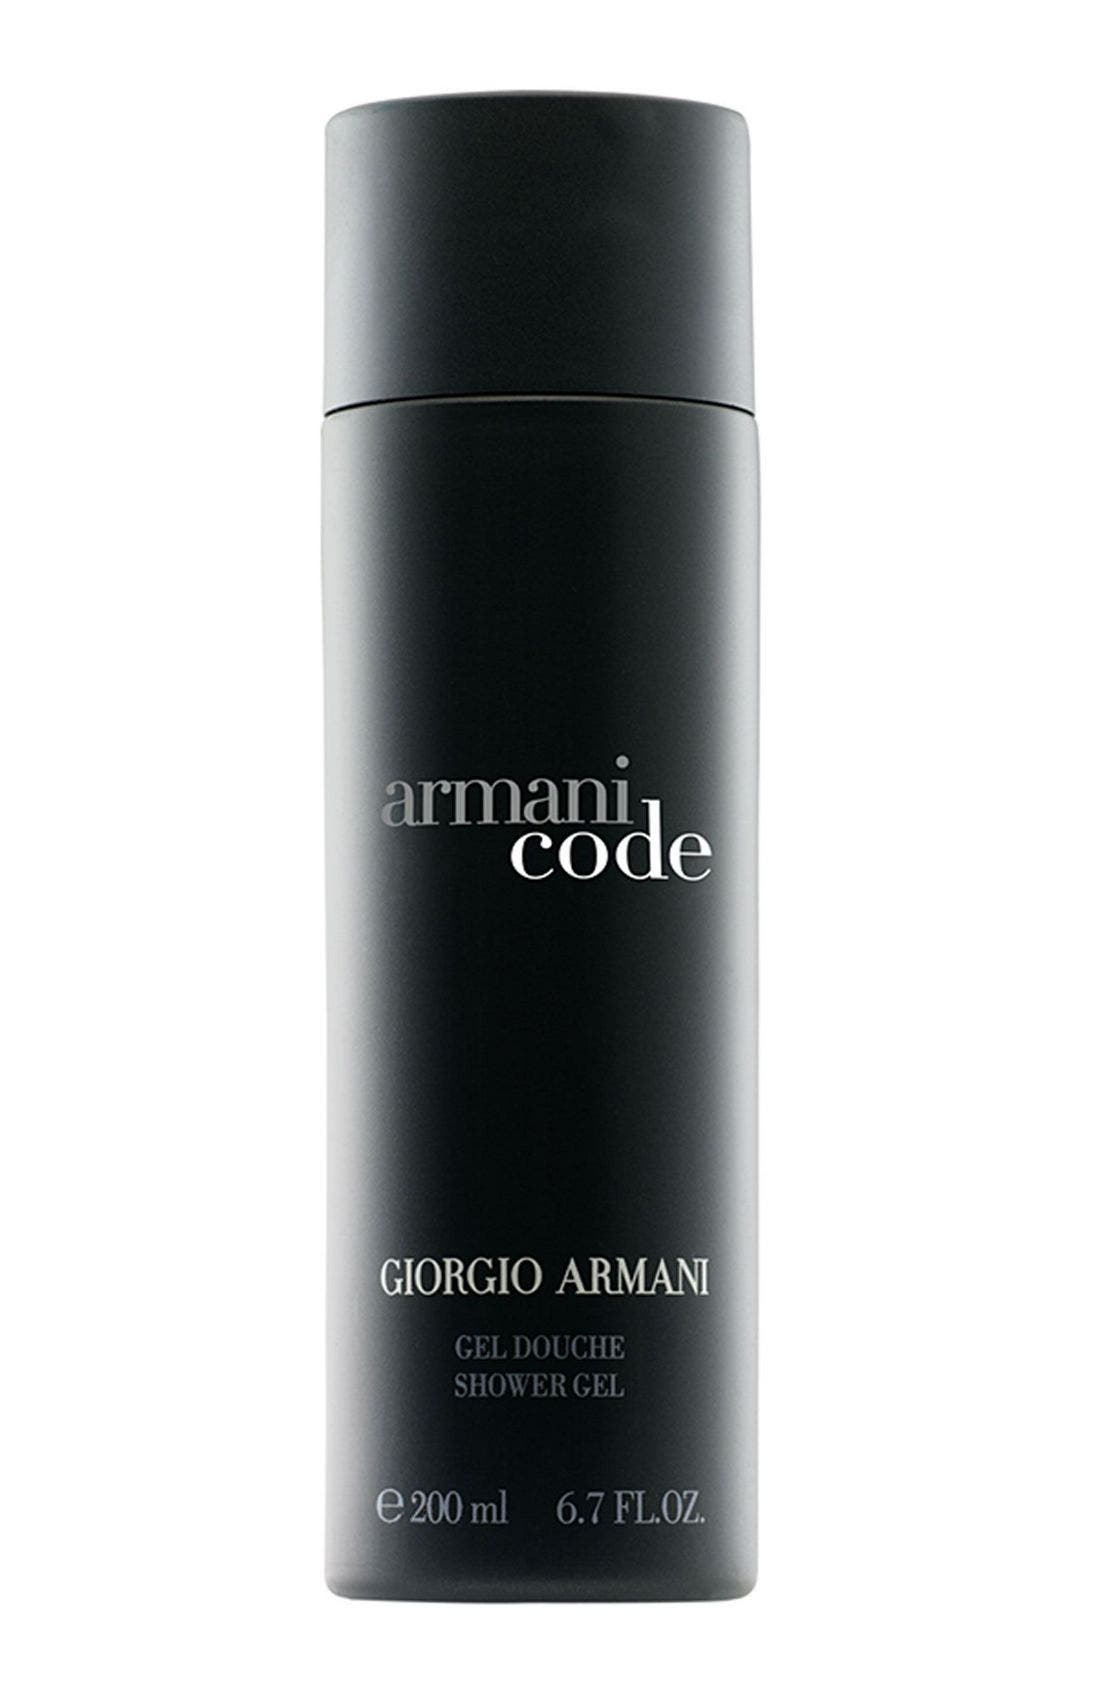 giorgio armani code shower gel